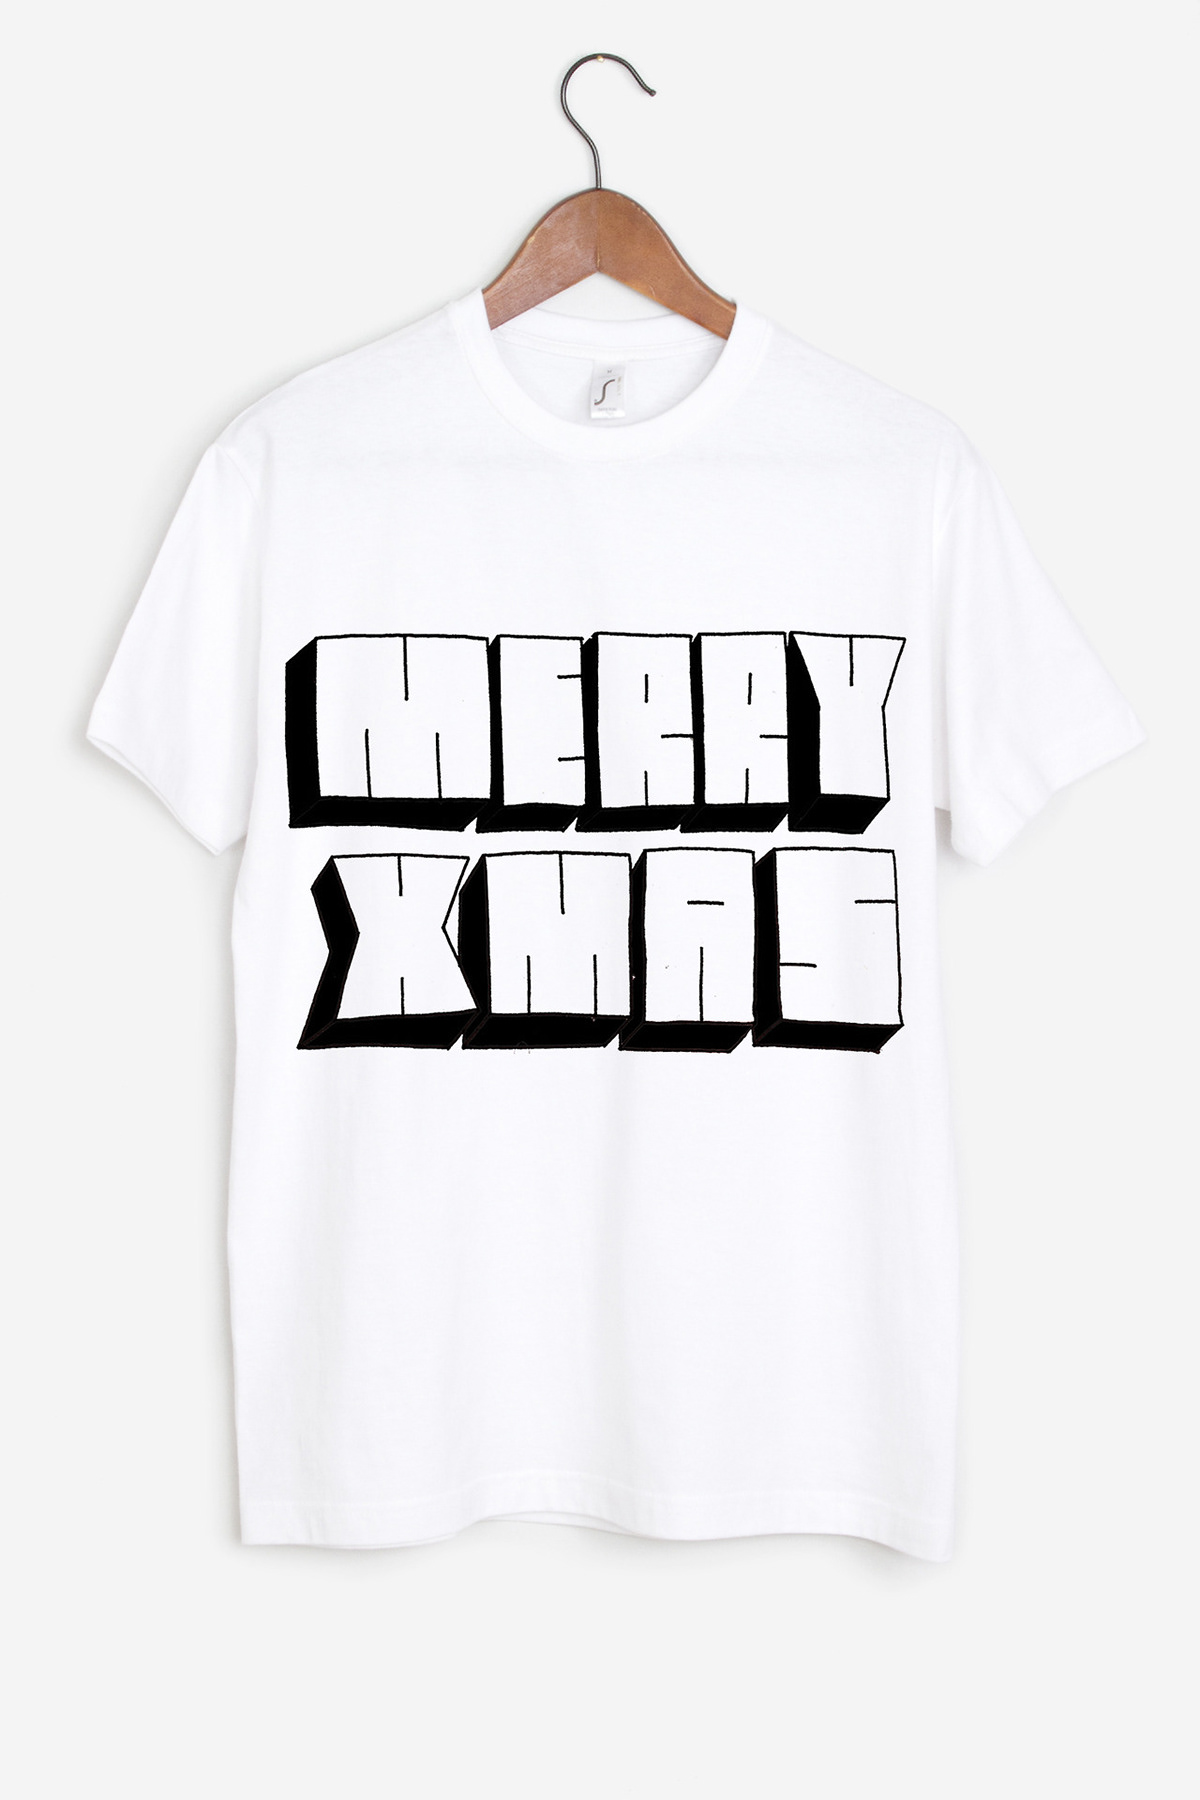 Leah Hayes hayes Merry Xmas x-mas Christmas Clothing